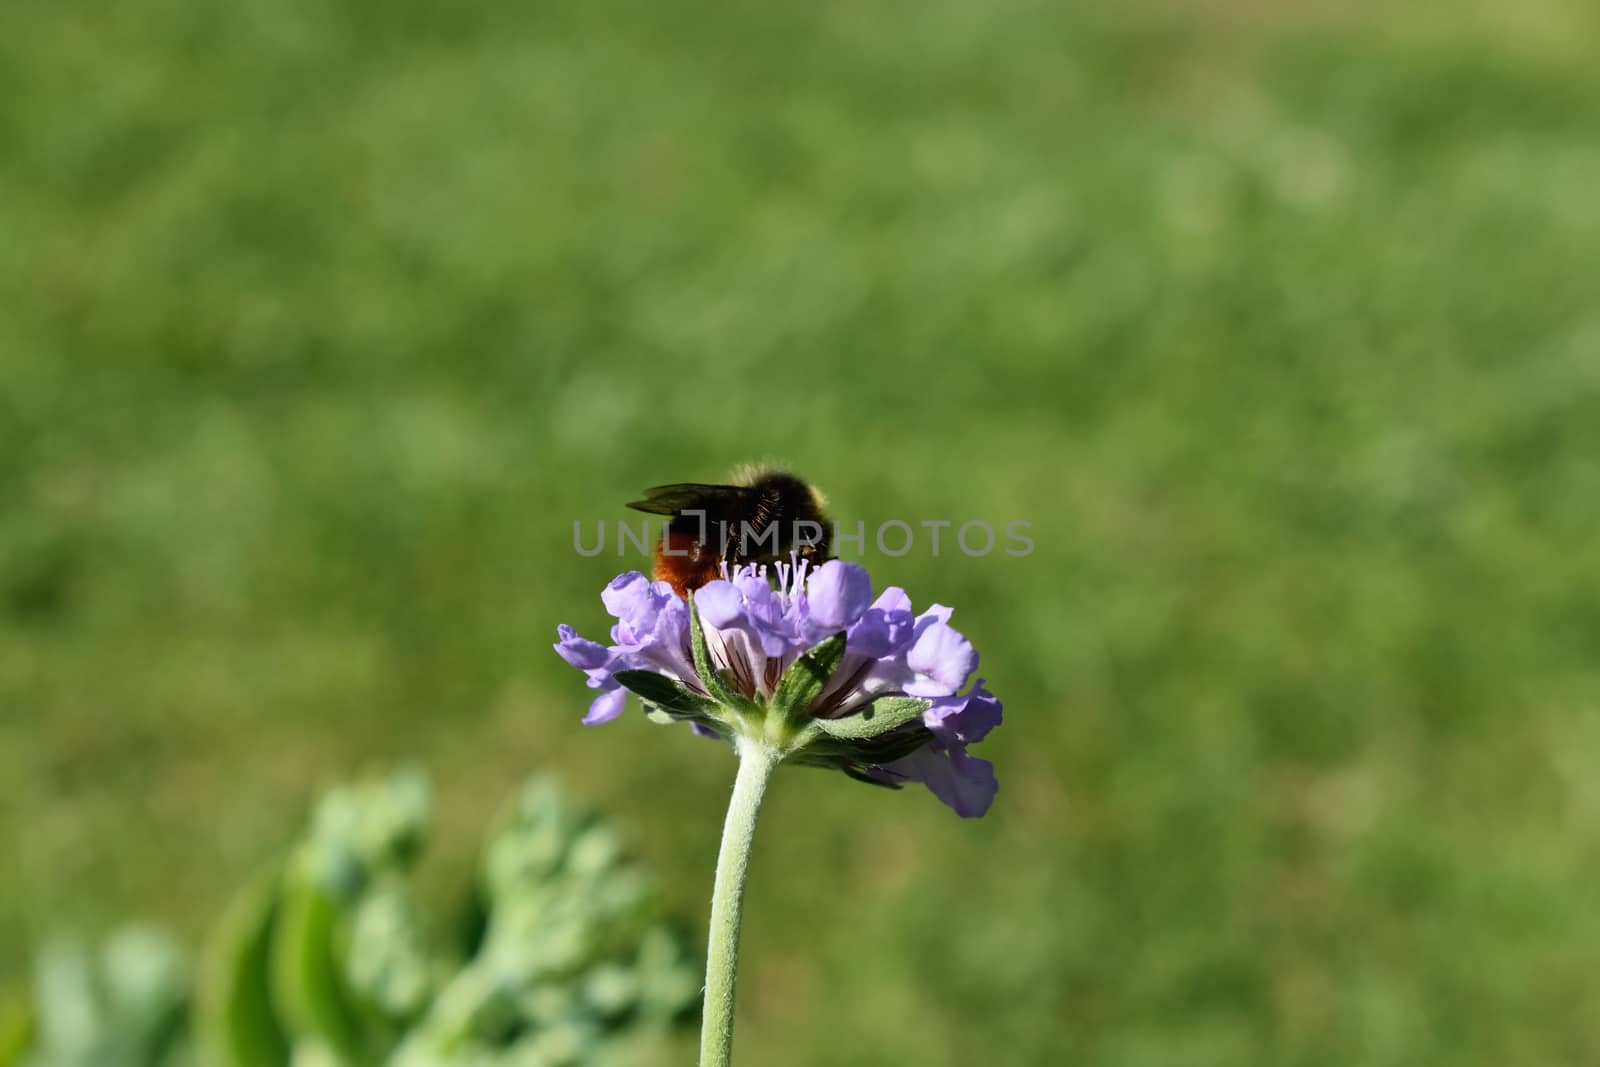 Honey Bee on Purple Flower on summers day in garden